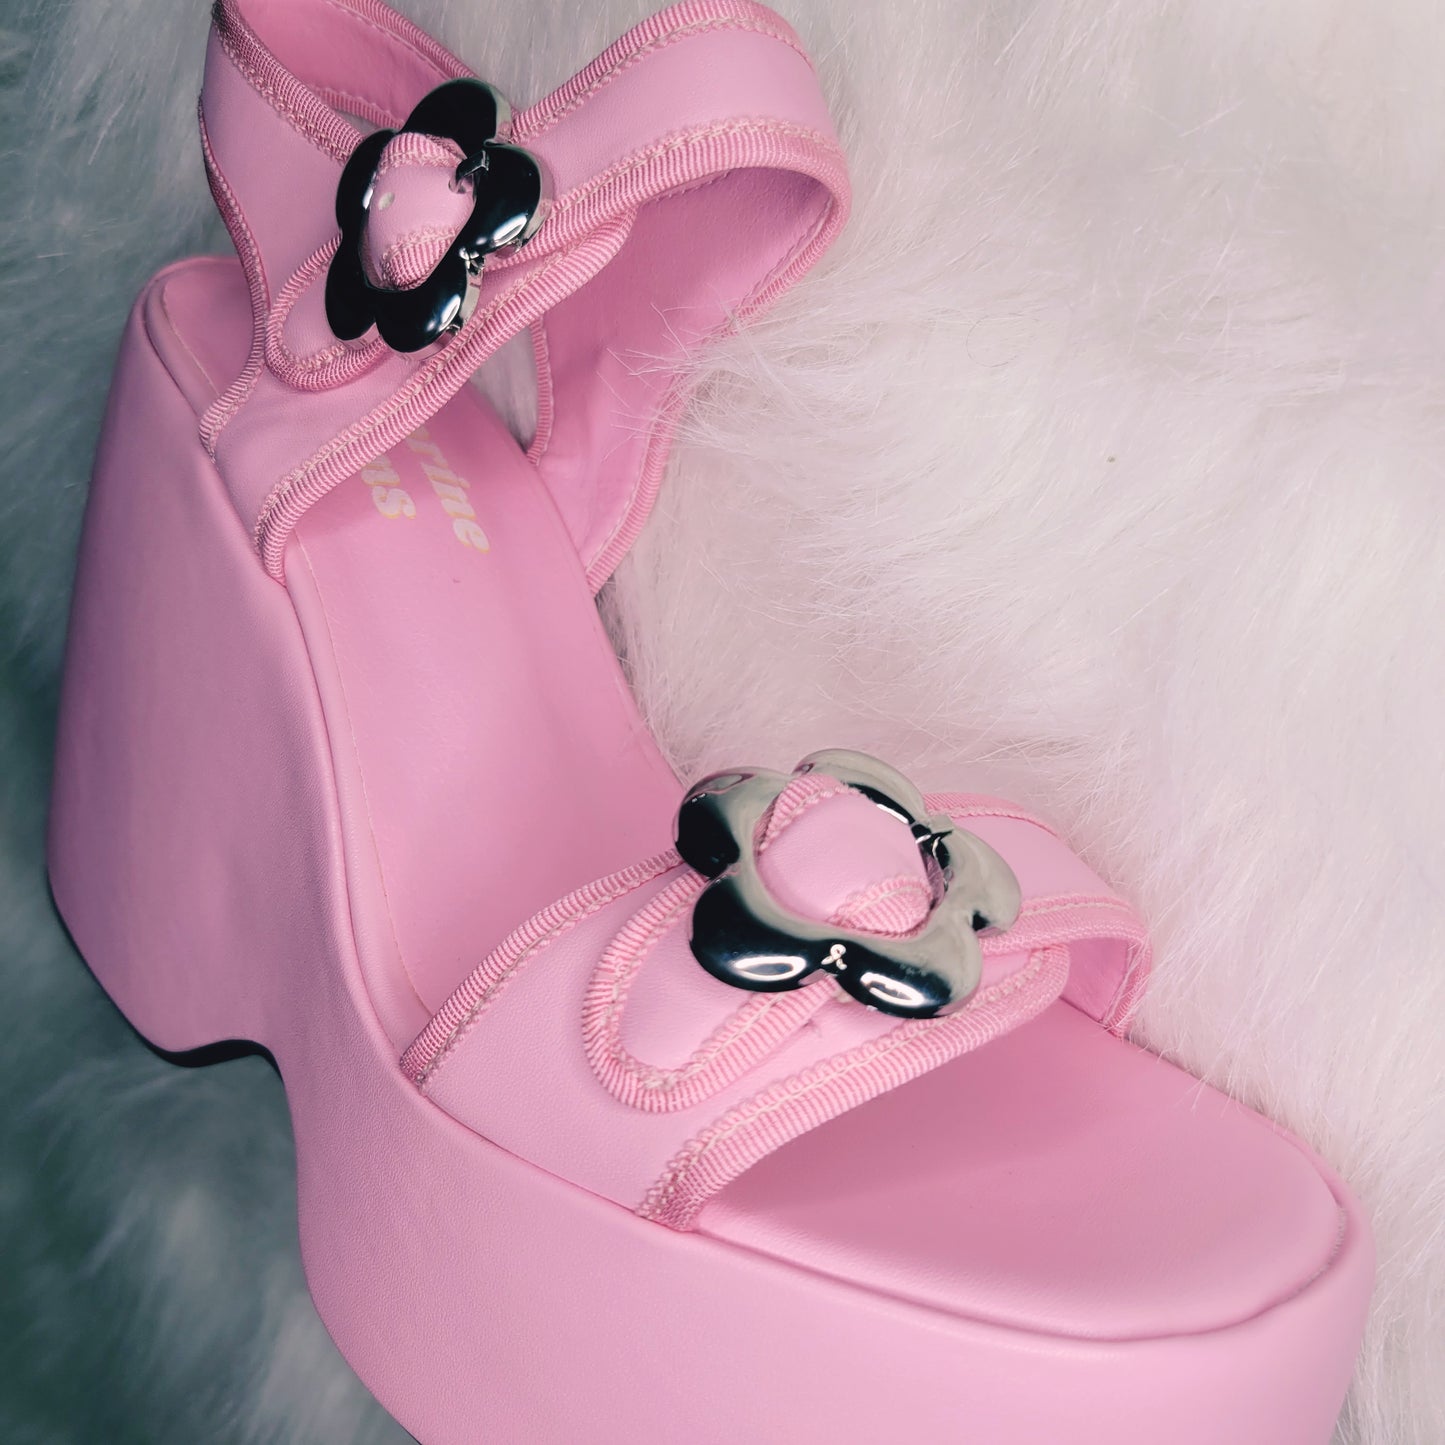 Ezra Pink Flower Power Platform Sandals